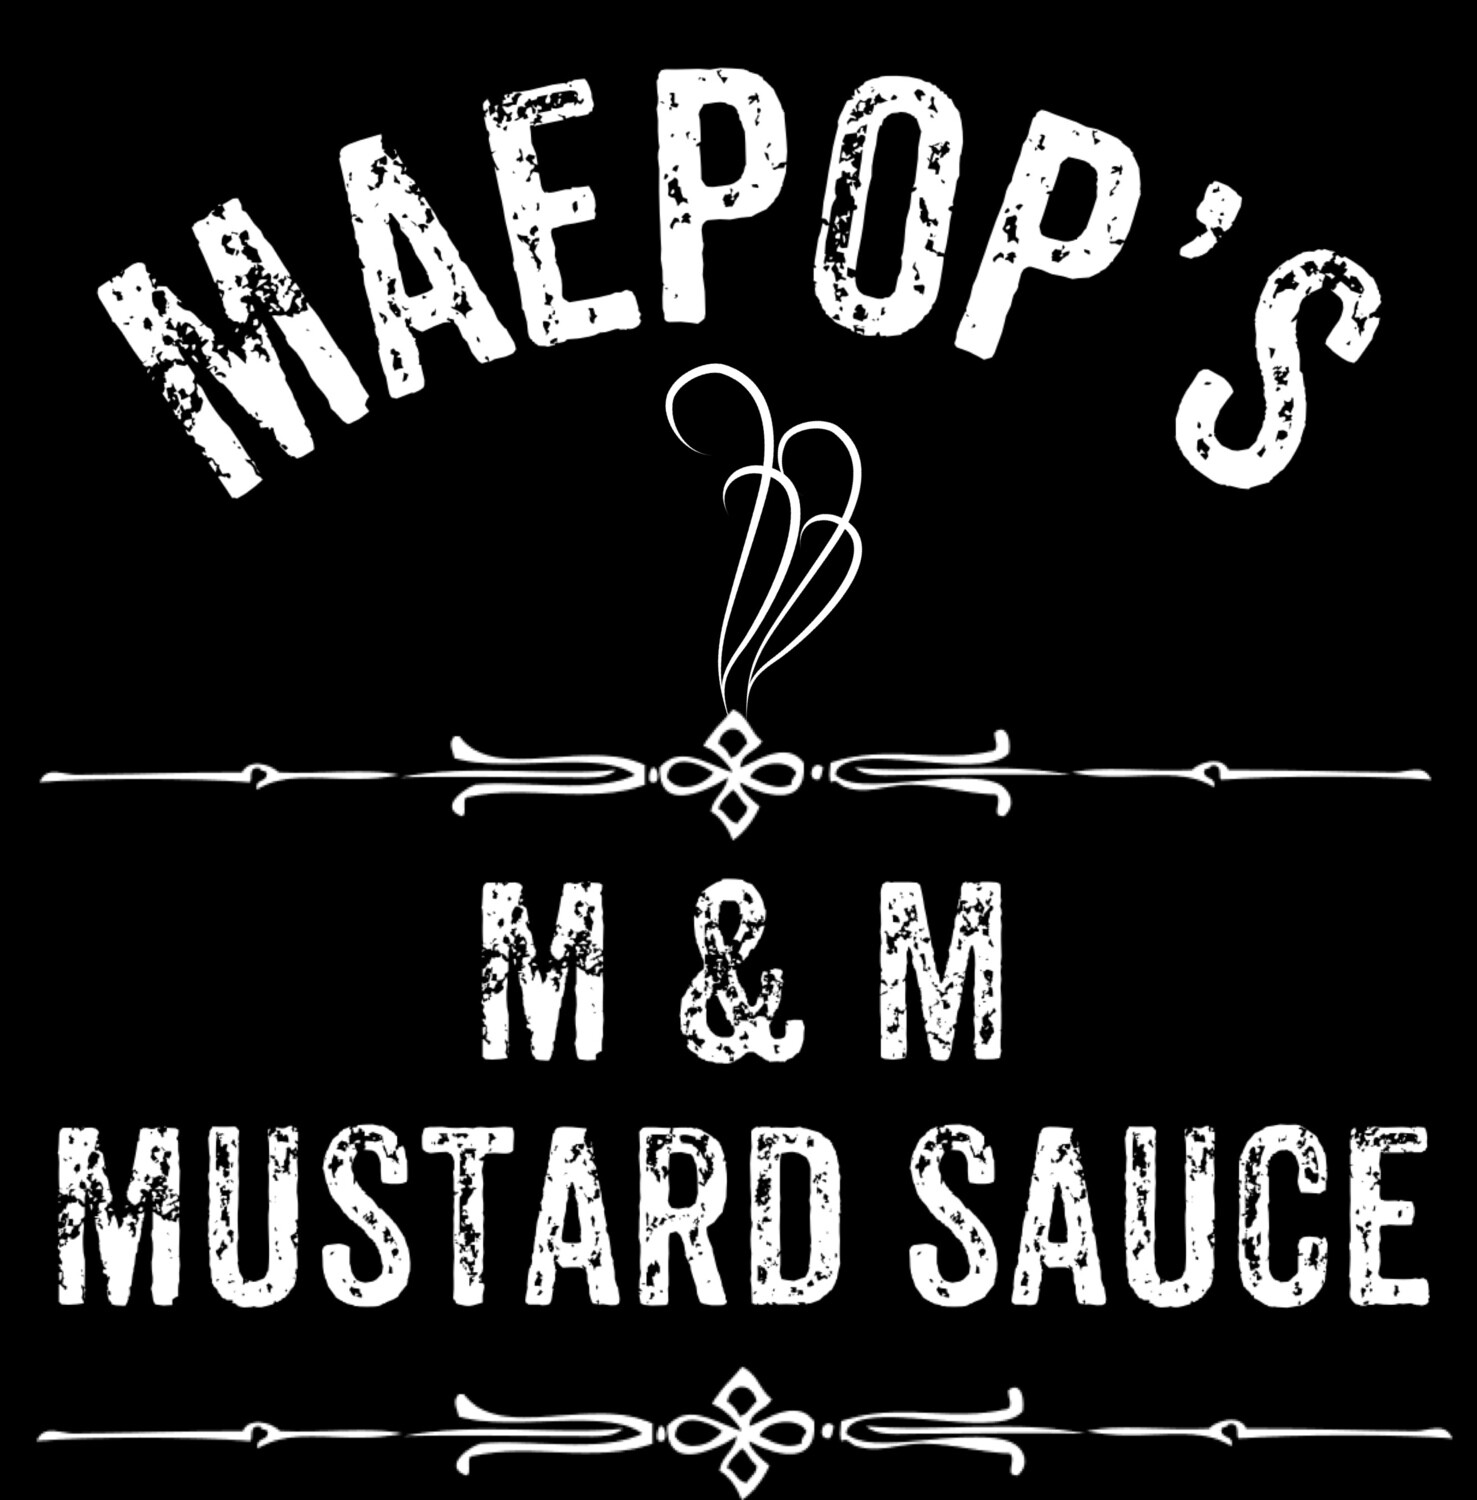 M&M Mustard Sauce
REFILLABLE BOTTLE